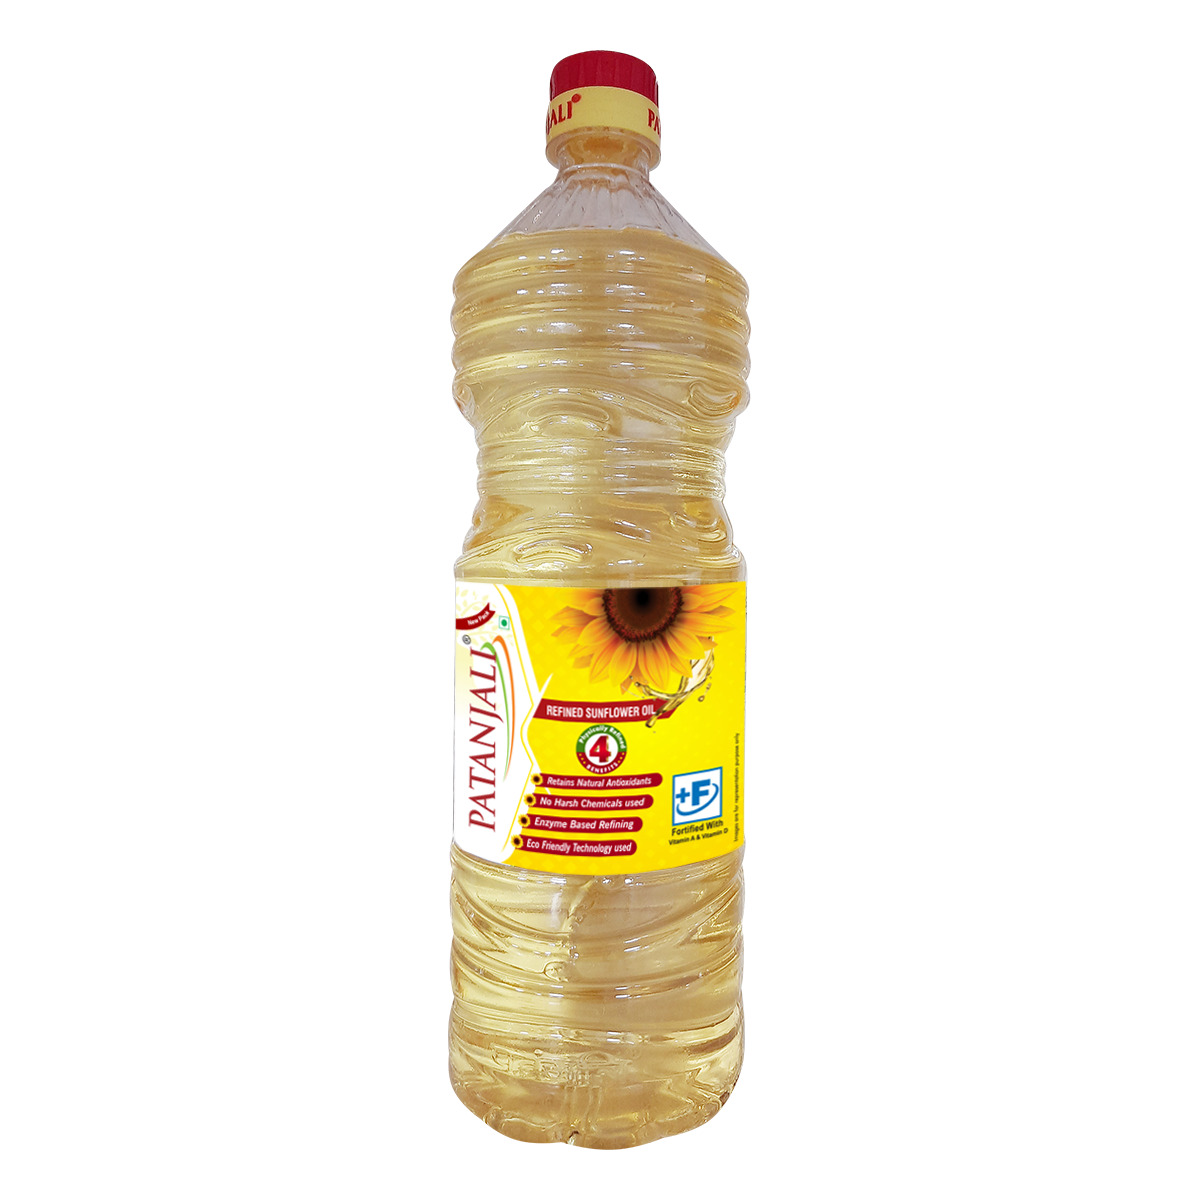 Patanjali Sunflower Oil